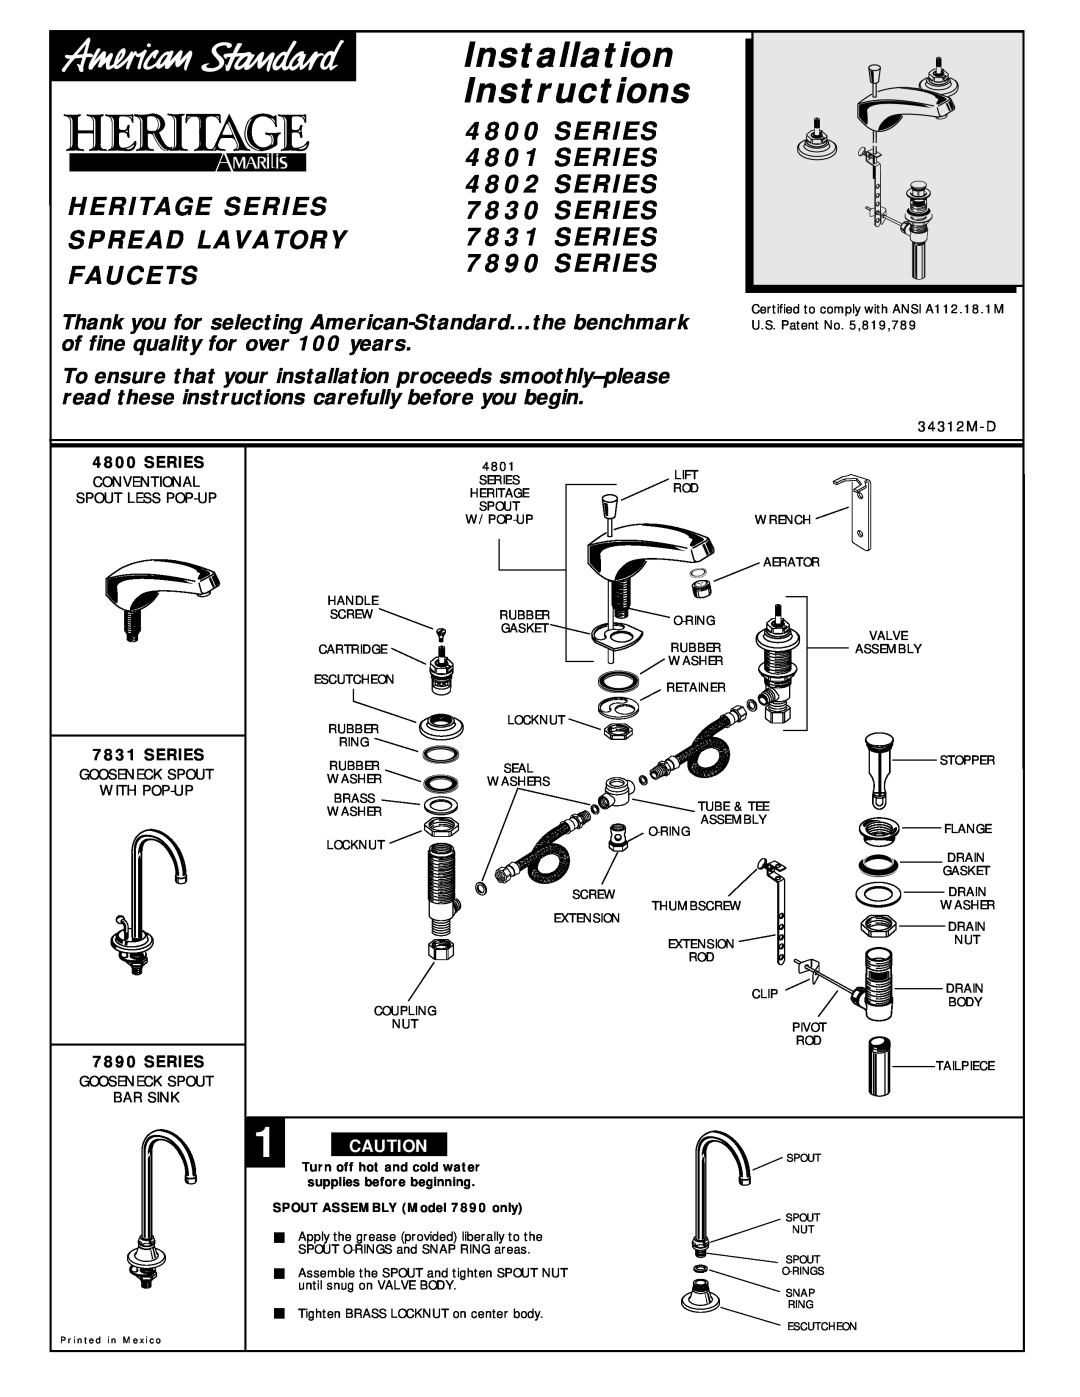 American Standard 4800 SERIES installation instructions Installation Instructions, Heritage Series, Spread Lavatory 